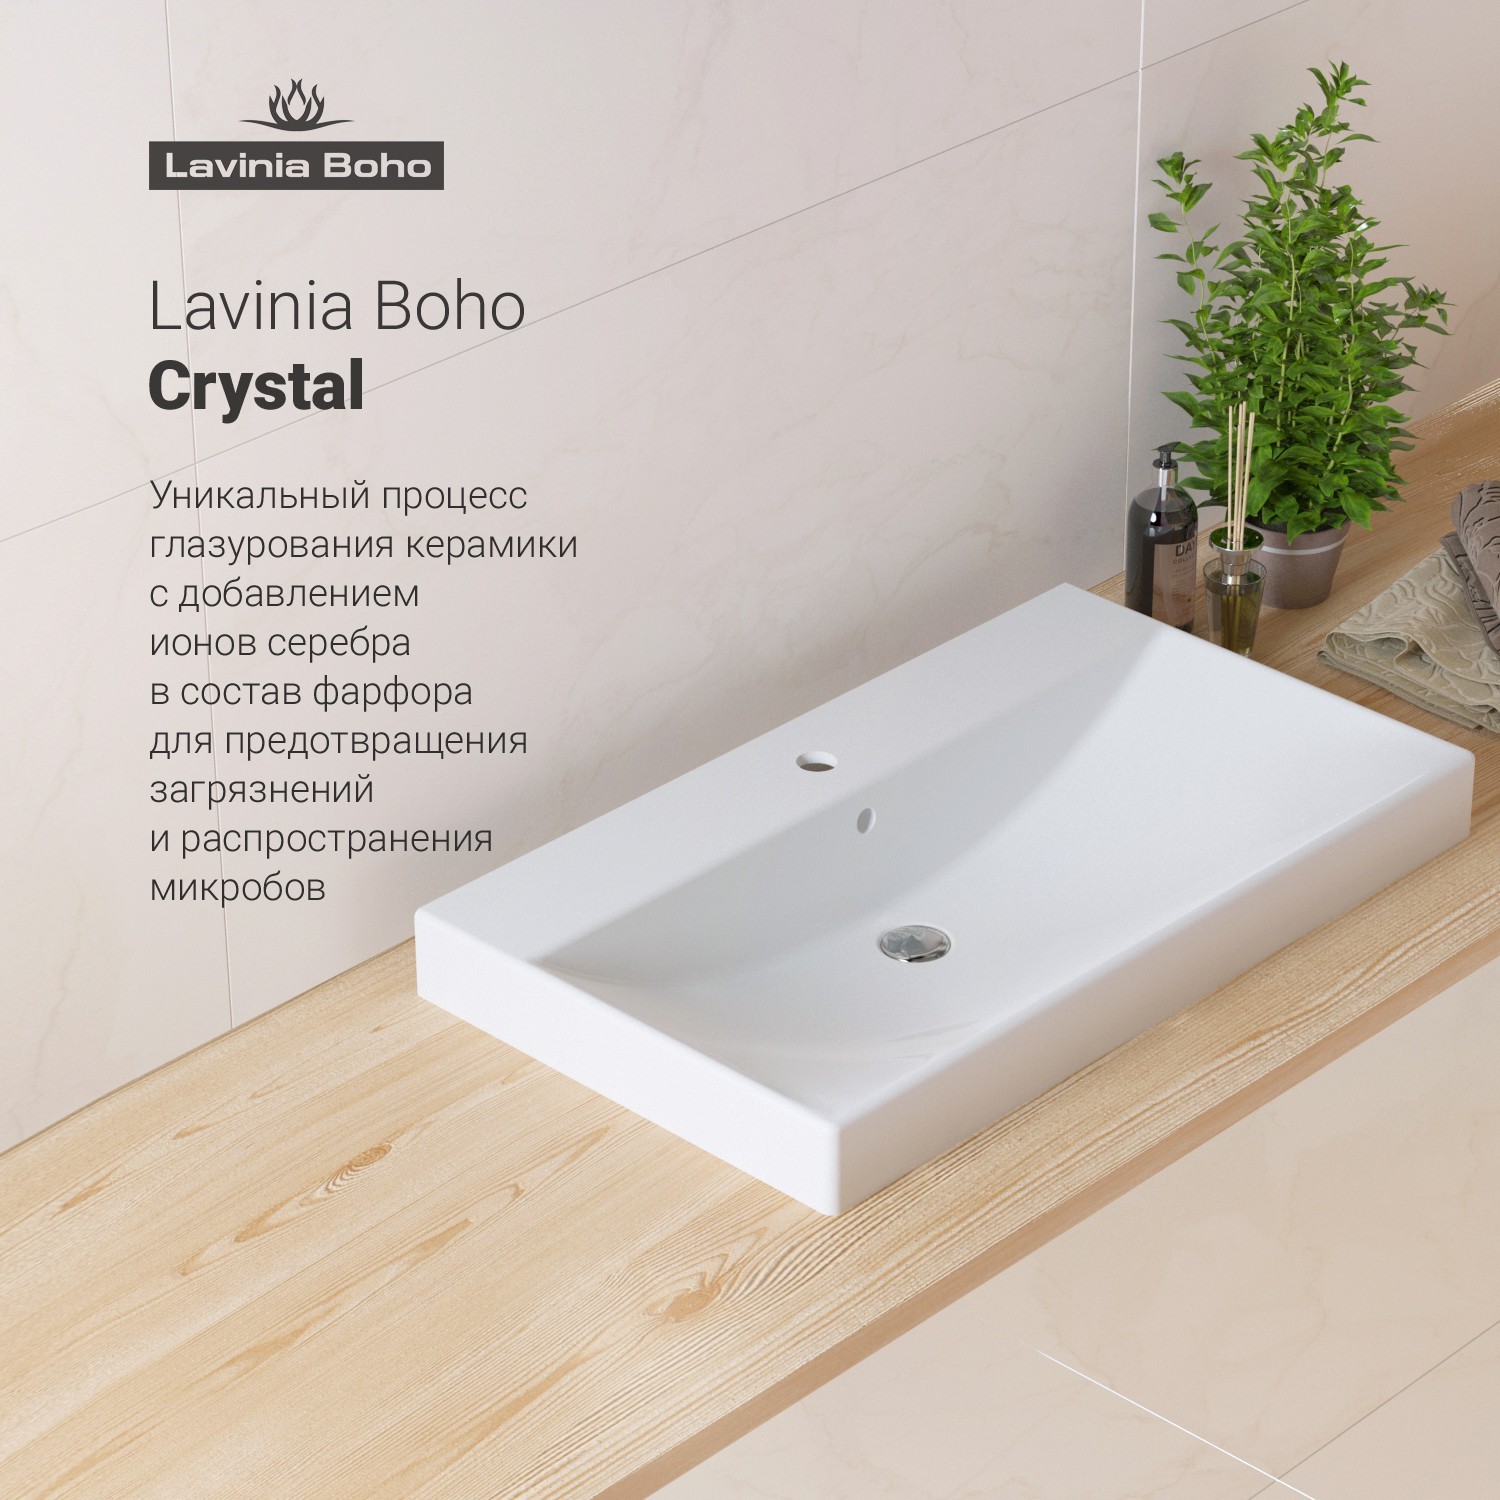 Lavinia Boho Bathroom Sink отзывы